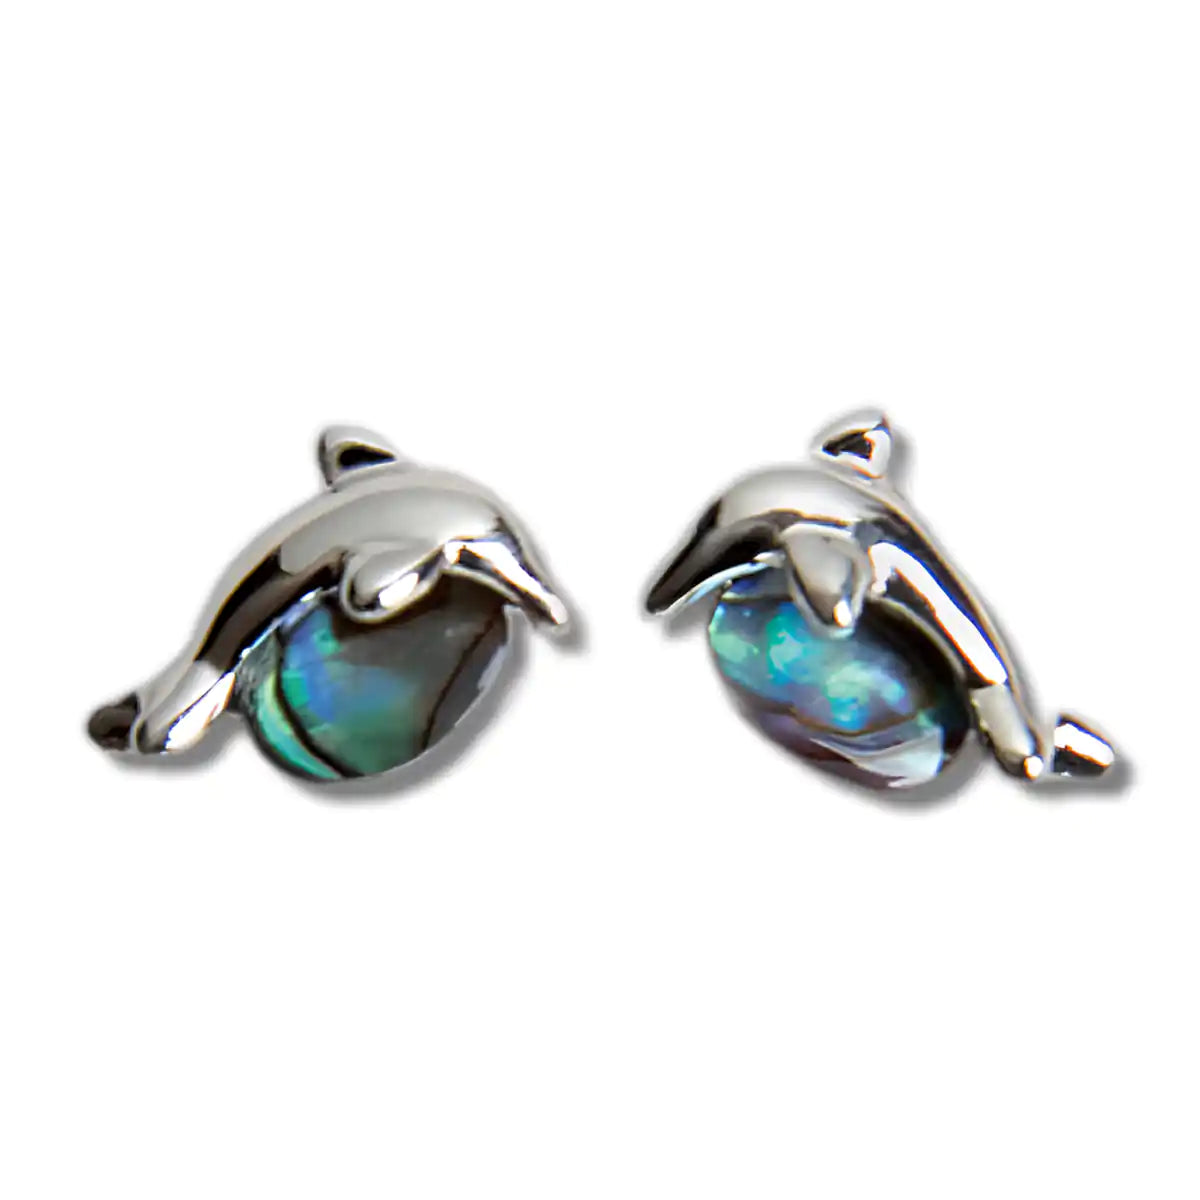 Glacier pearle dolphin stud earrings